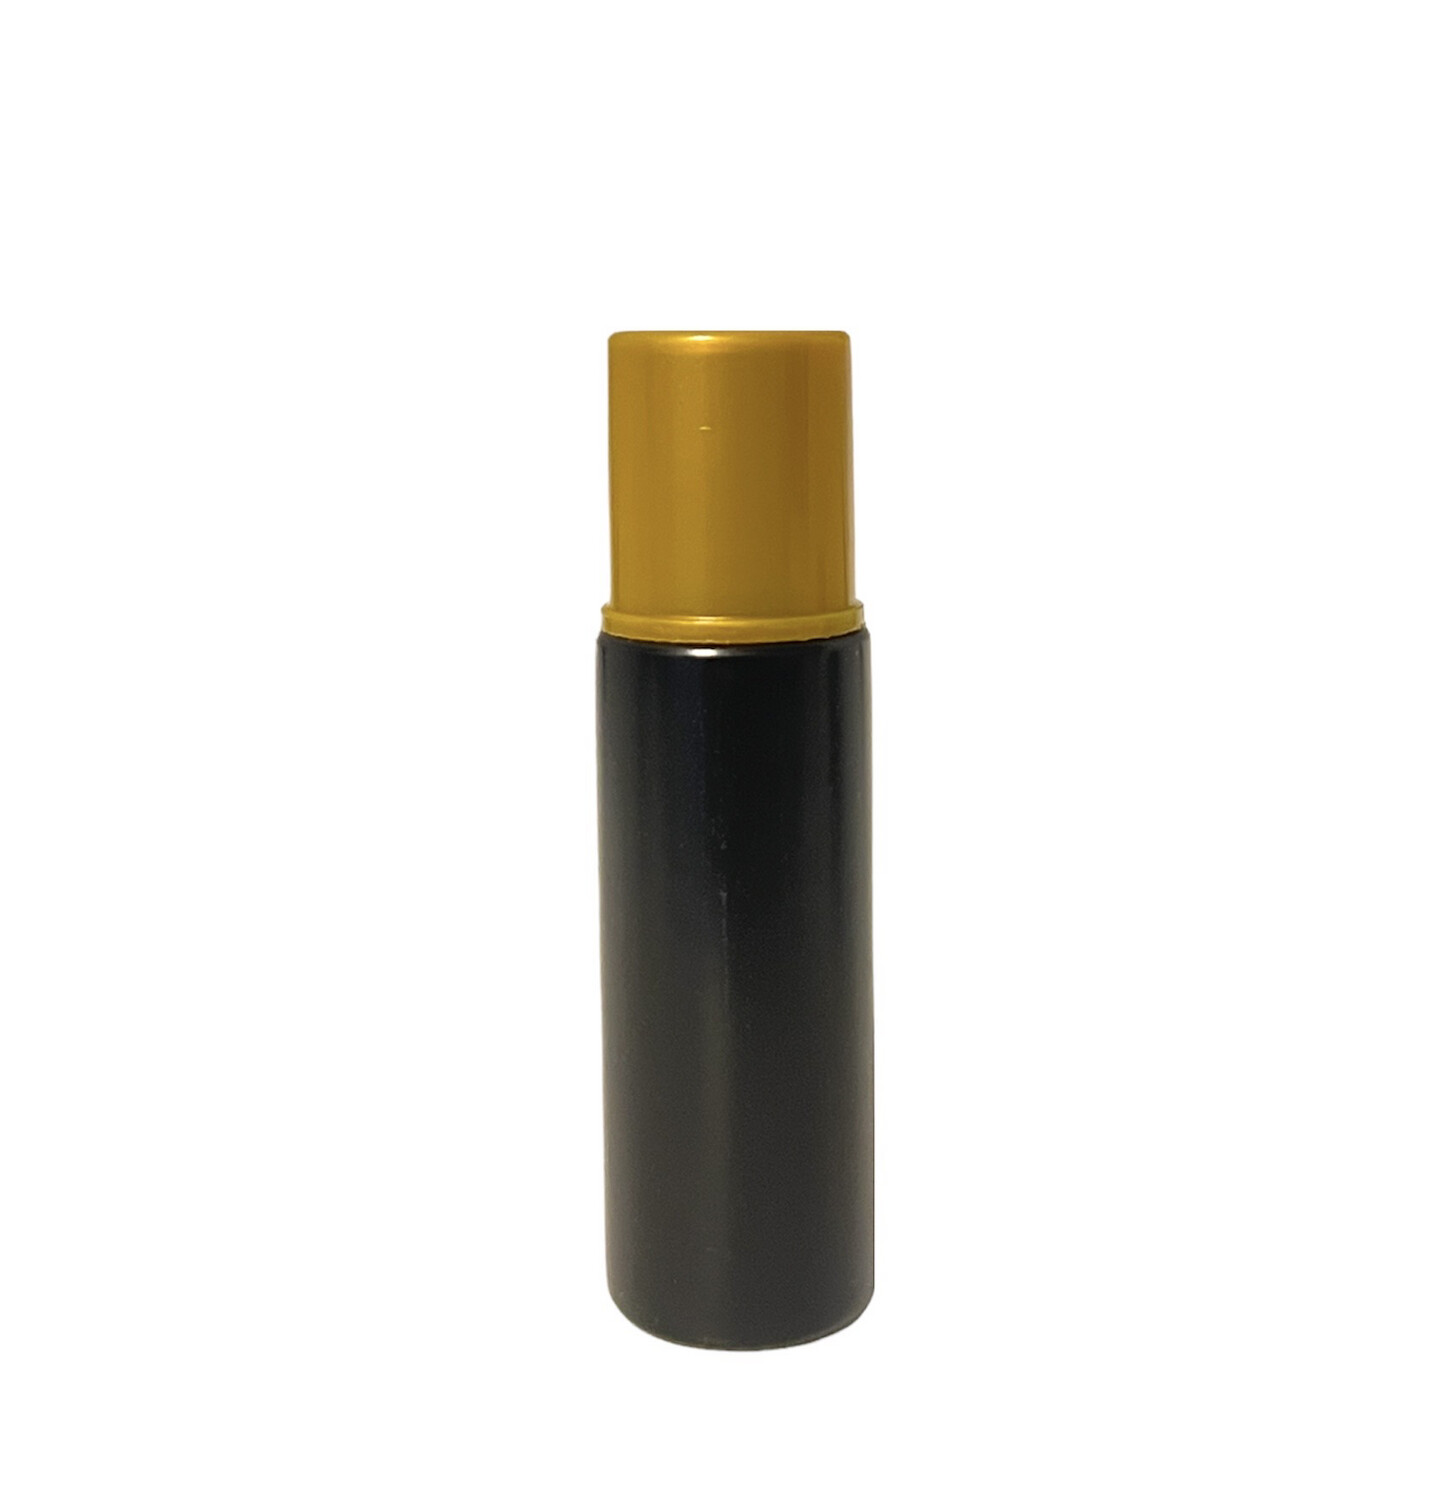 60ml HDPE Black Plastic Bottle With Gold Screw Cap